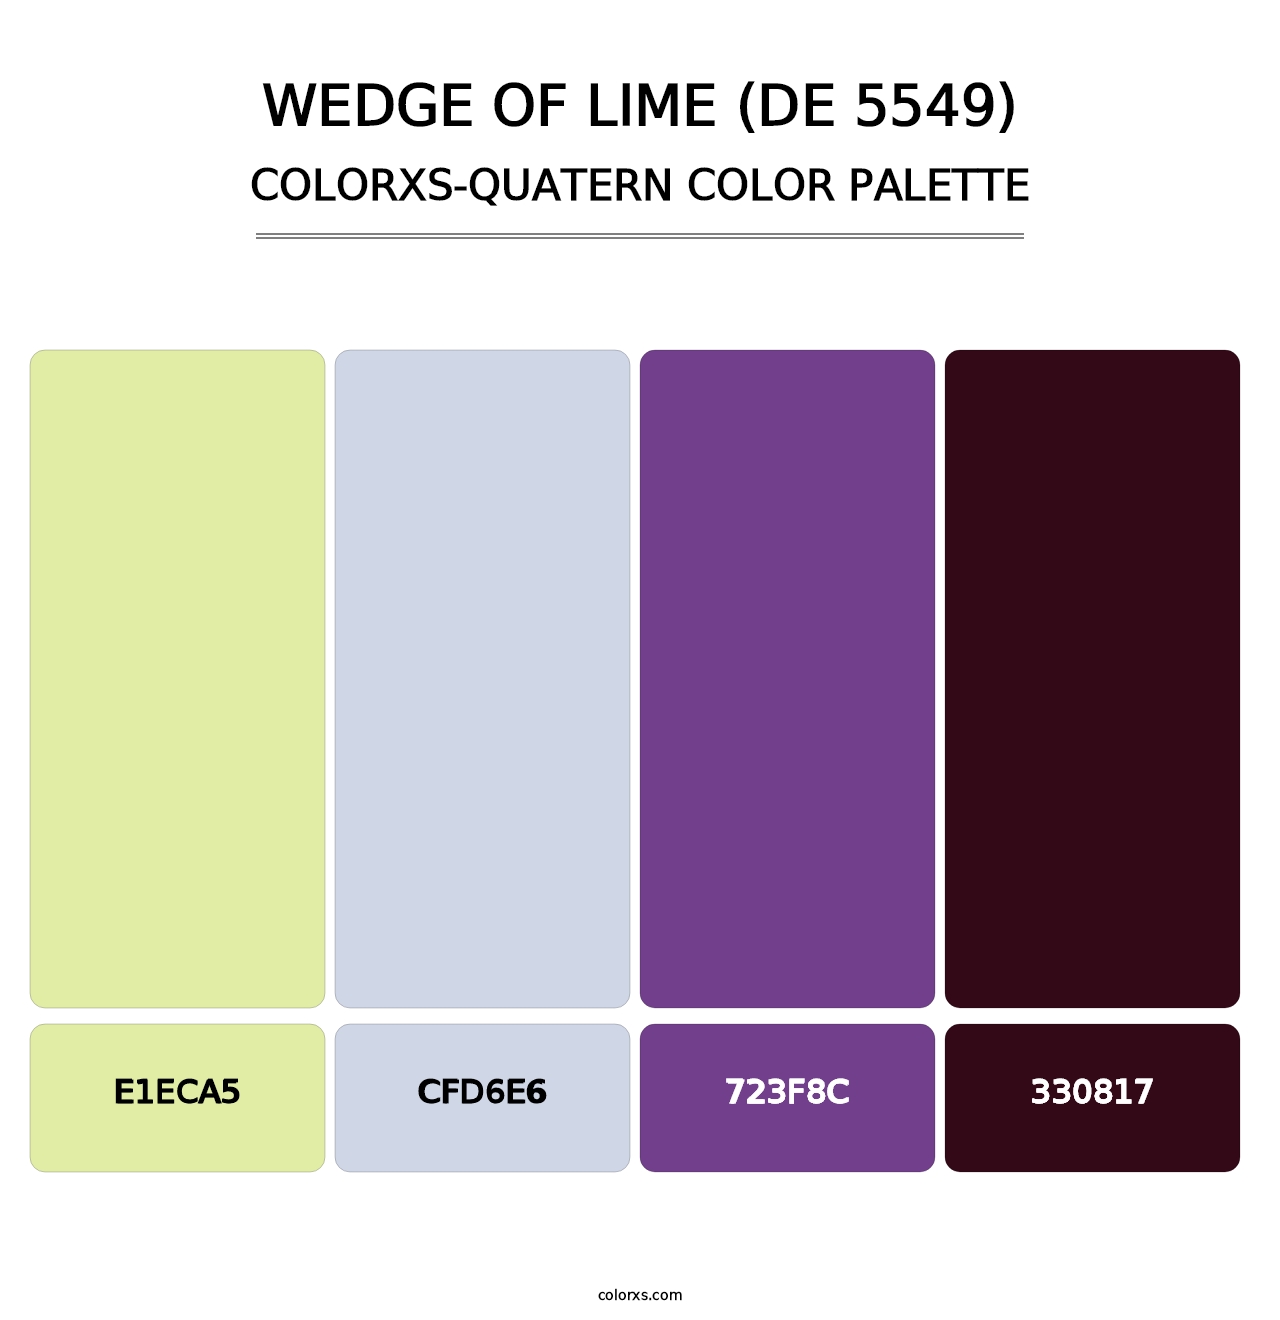 Wedge of Lime (DE 5549) - Colorxs Quatern Palette